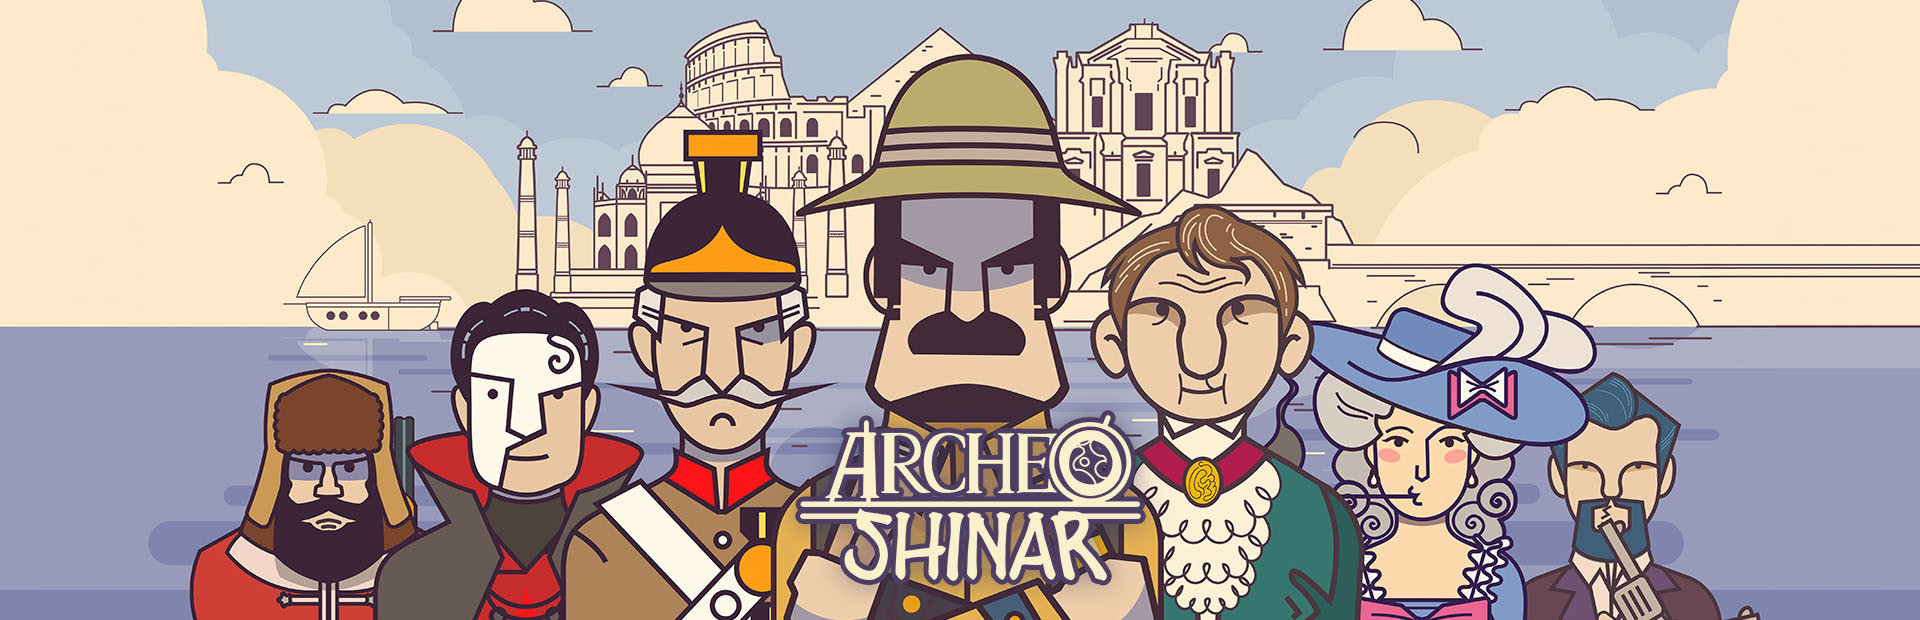 Archeo: Shinar cover image